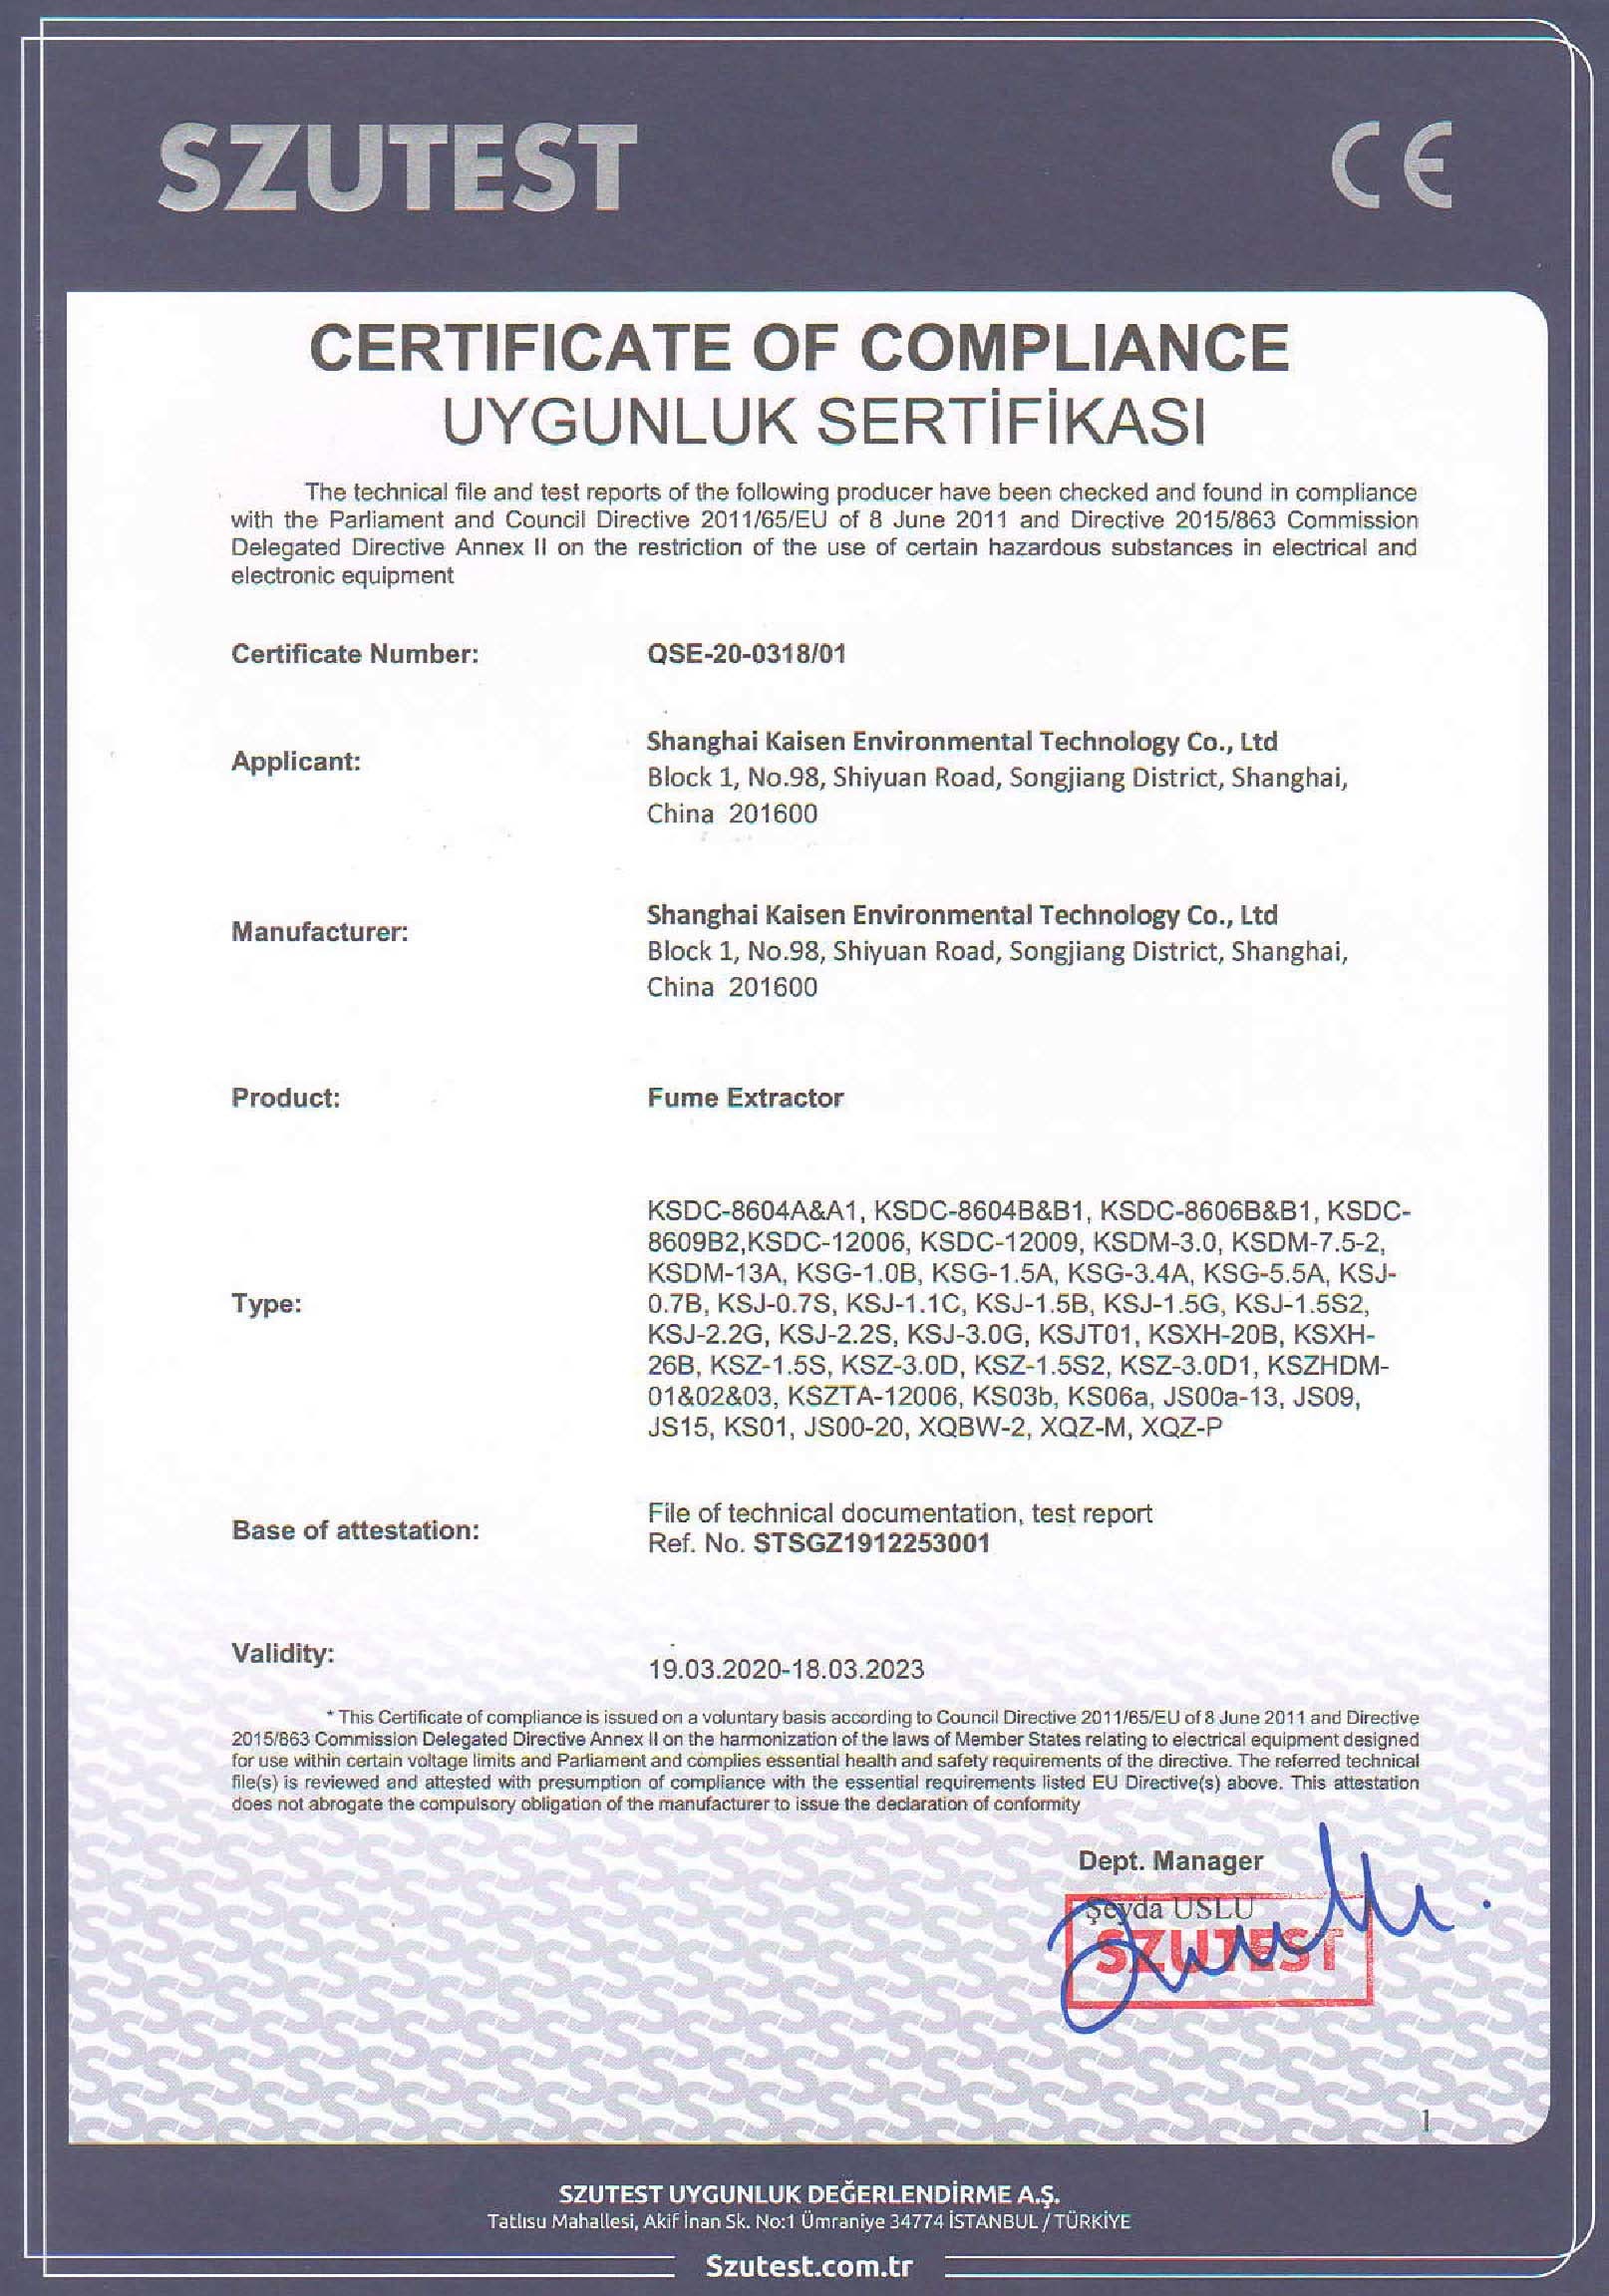 Shanghai Kaisen Environmental Technology Co., Ltd. Certifications